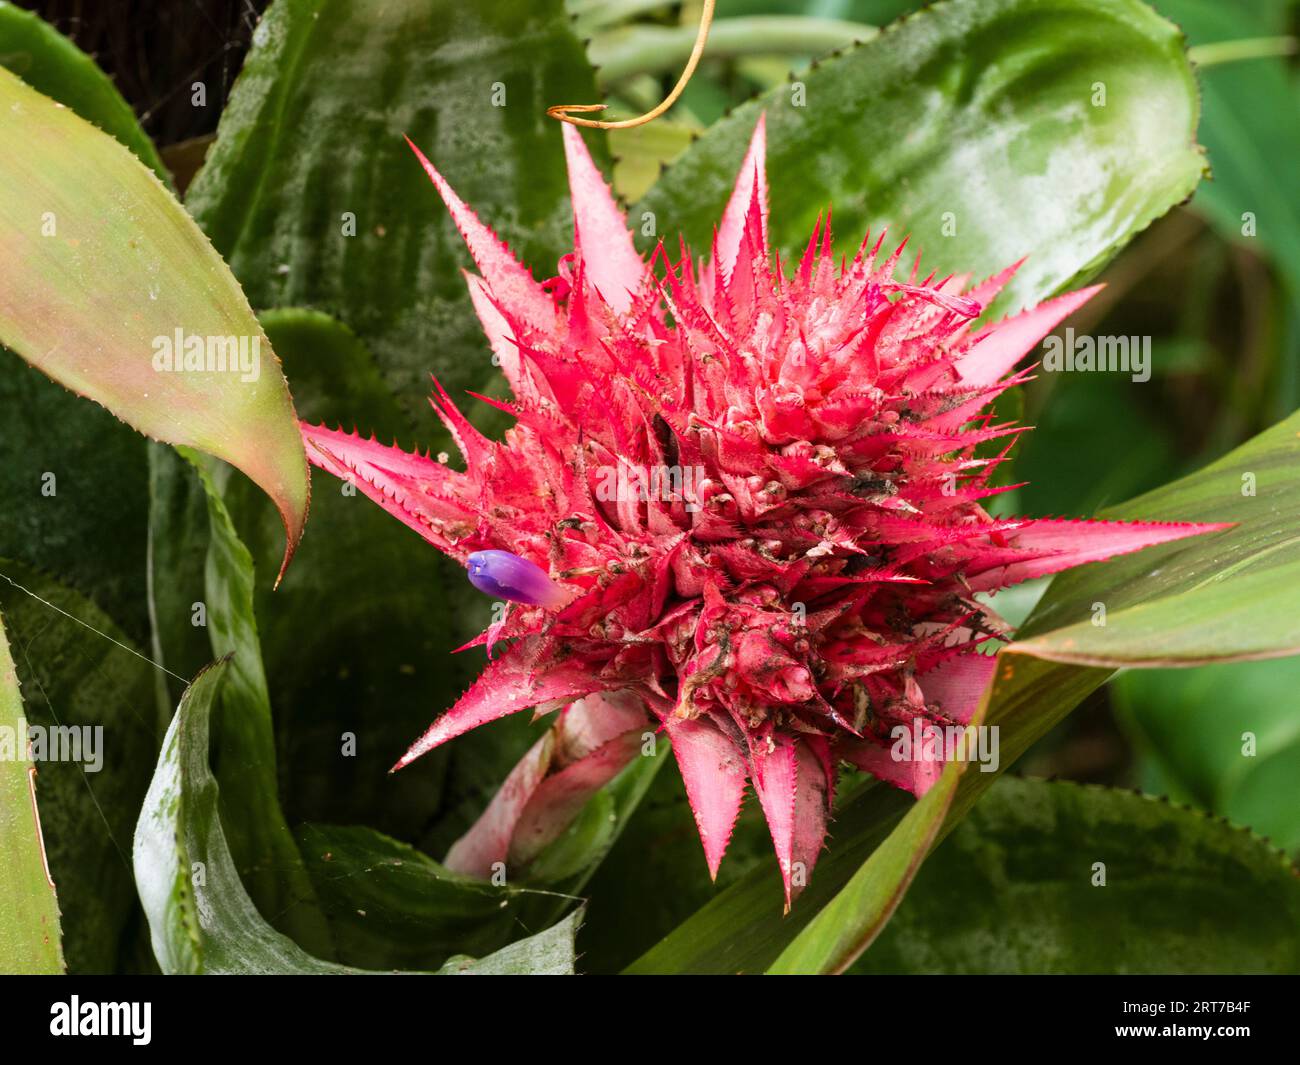 Pink infloresence of the tender Brazilian bromeliad Aechmea fasciata, an ornamental houseplant Stock Photo